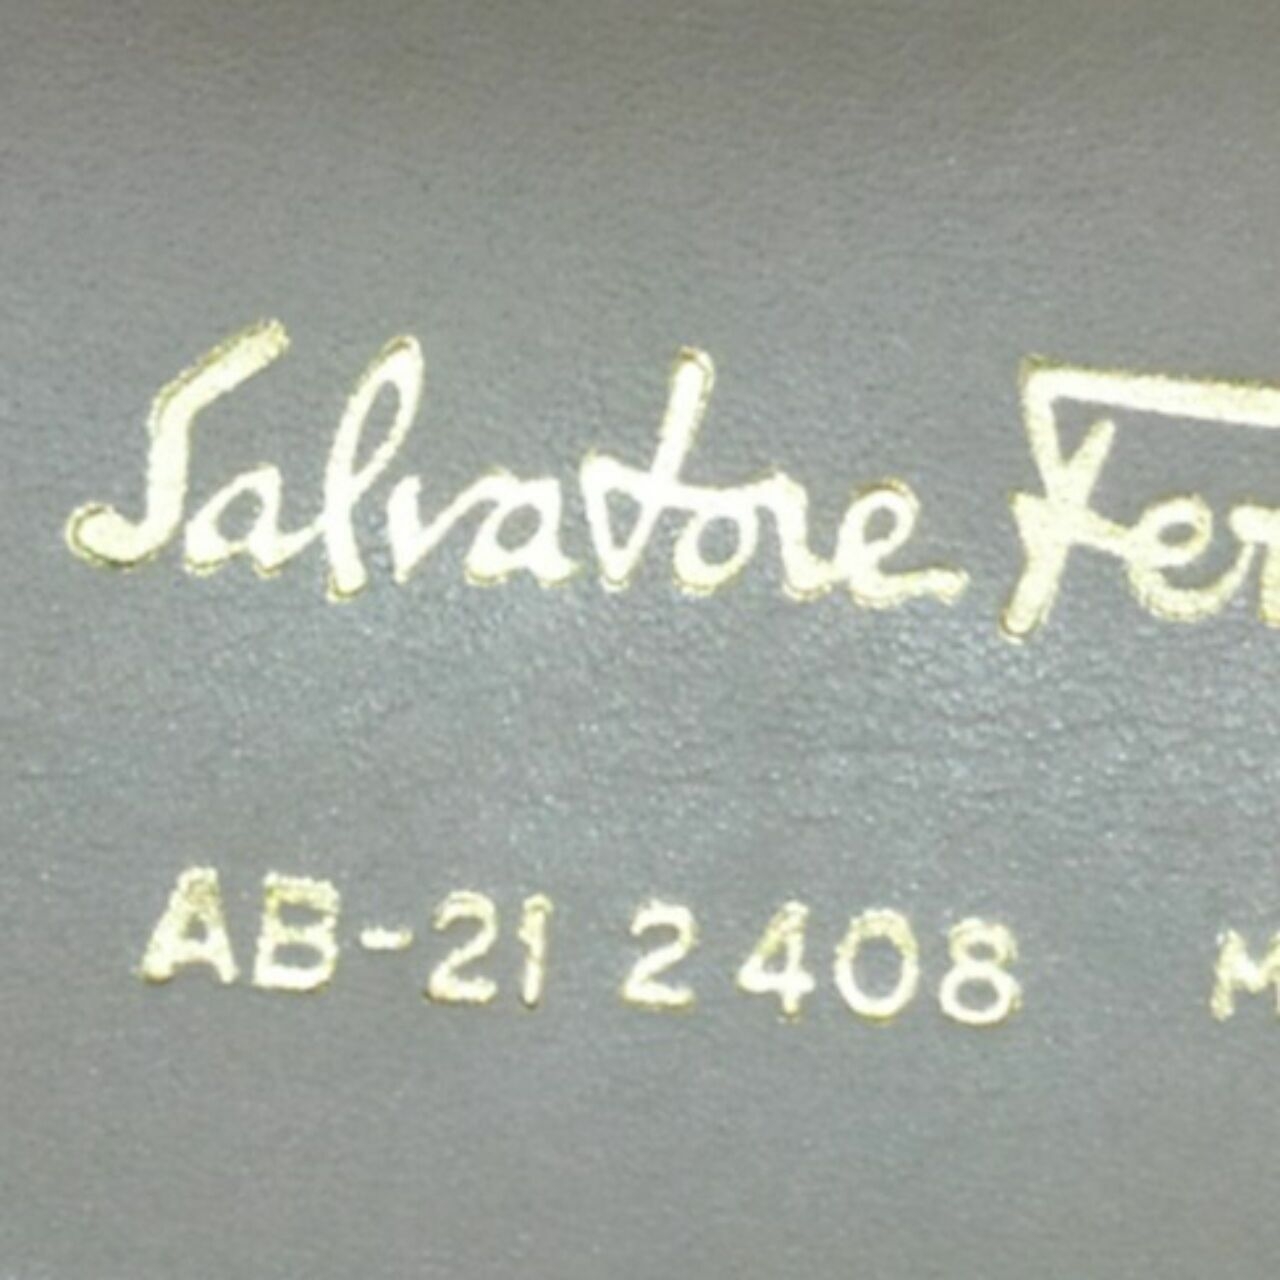 Salvatore Ferragamo Khaki Handbag AB-21 2 408